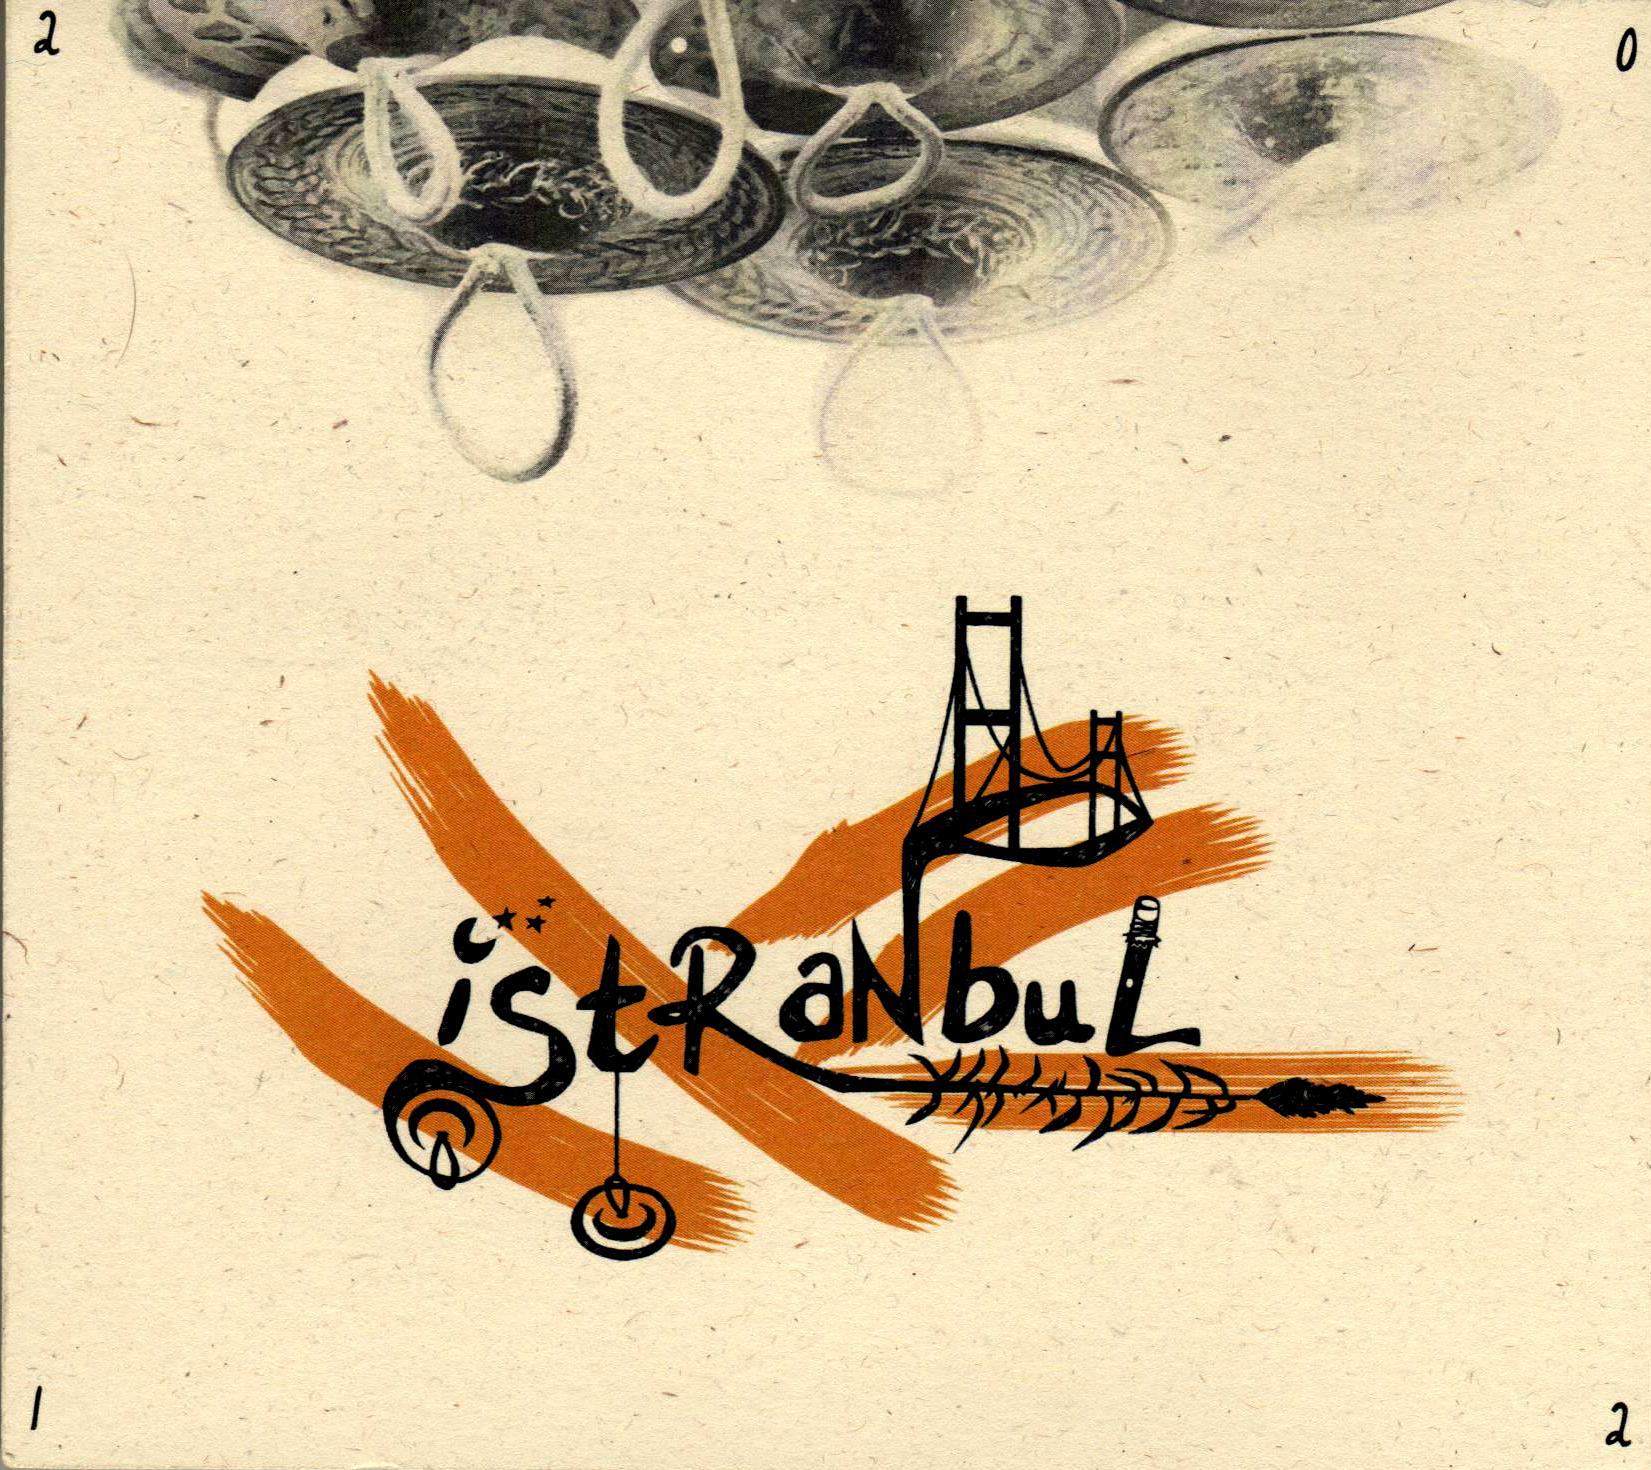 Istranbul – Music in progress